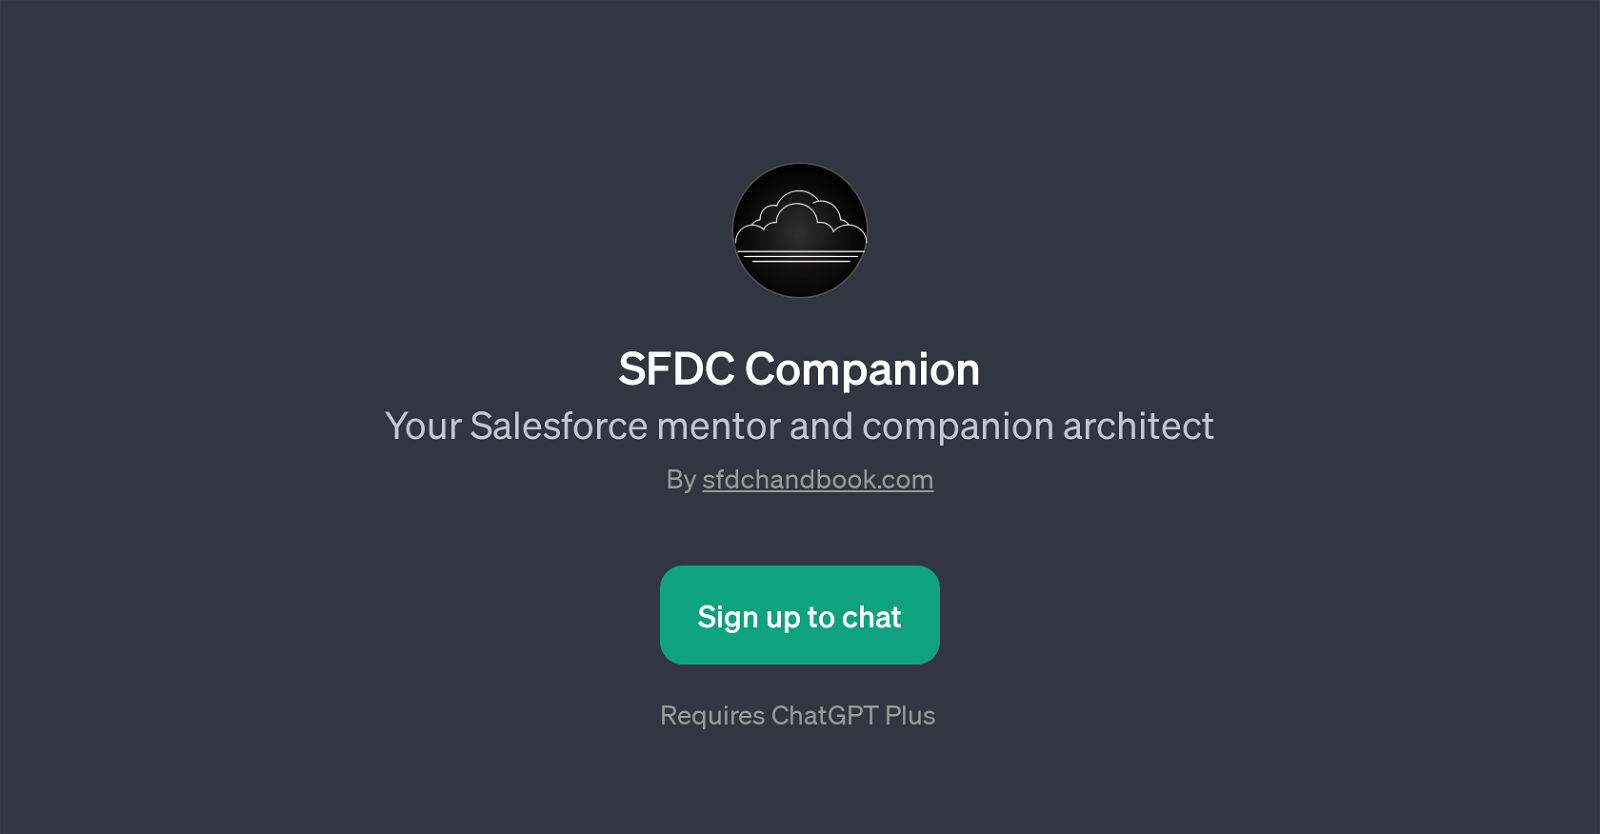 SFDC Companion website